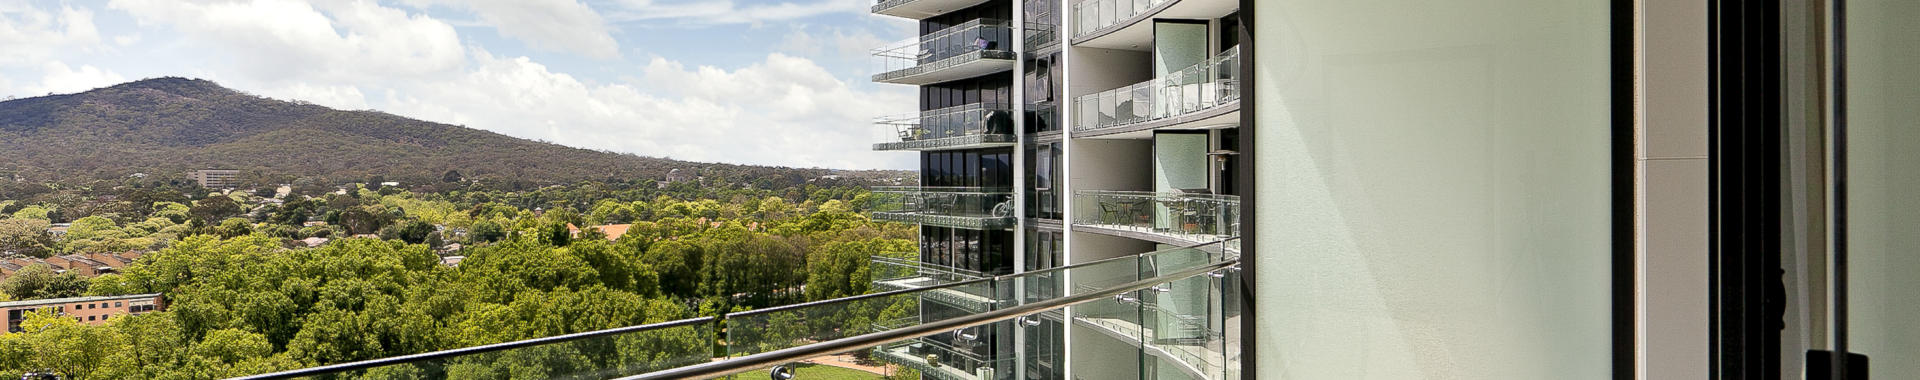 Canberra Bunda 2 bed corporate apartment balcony